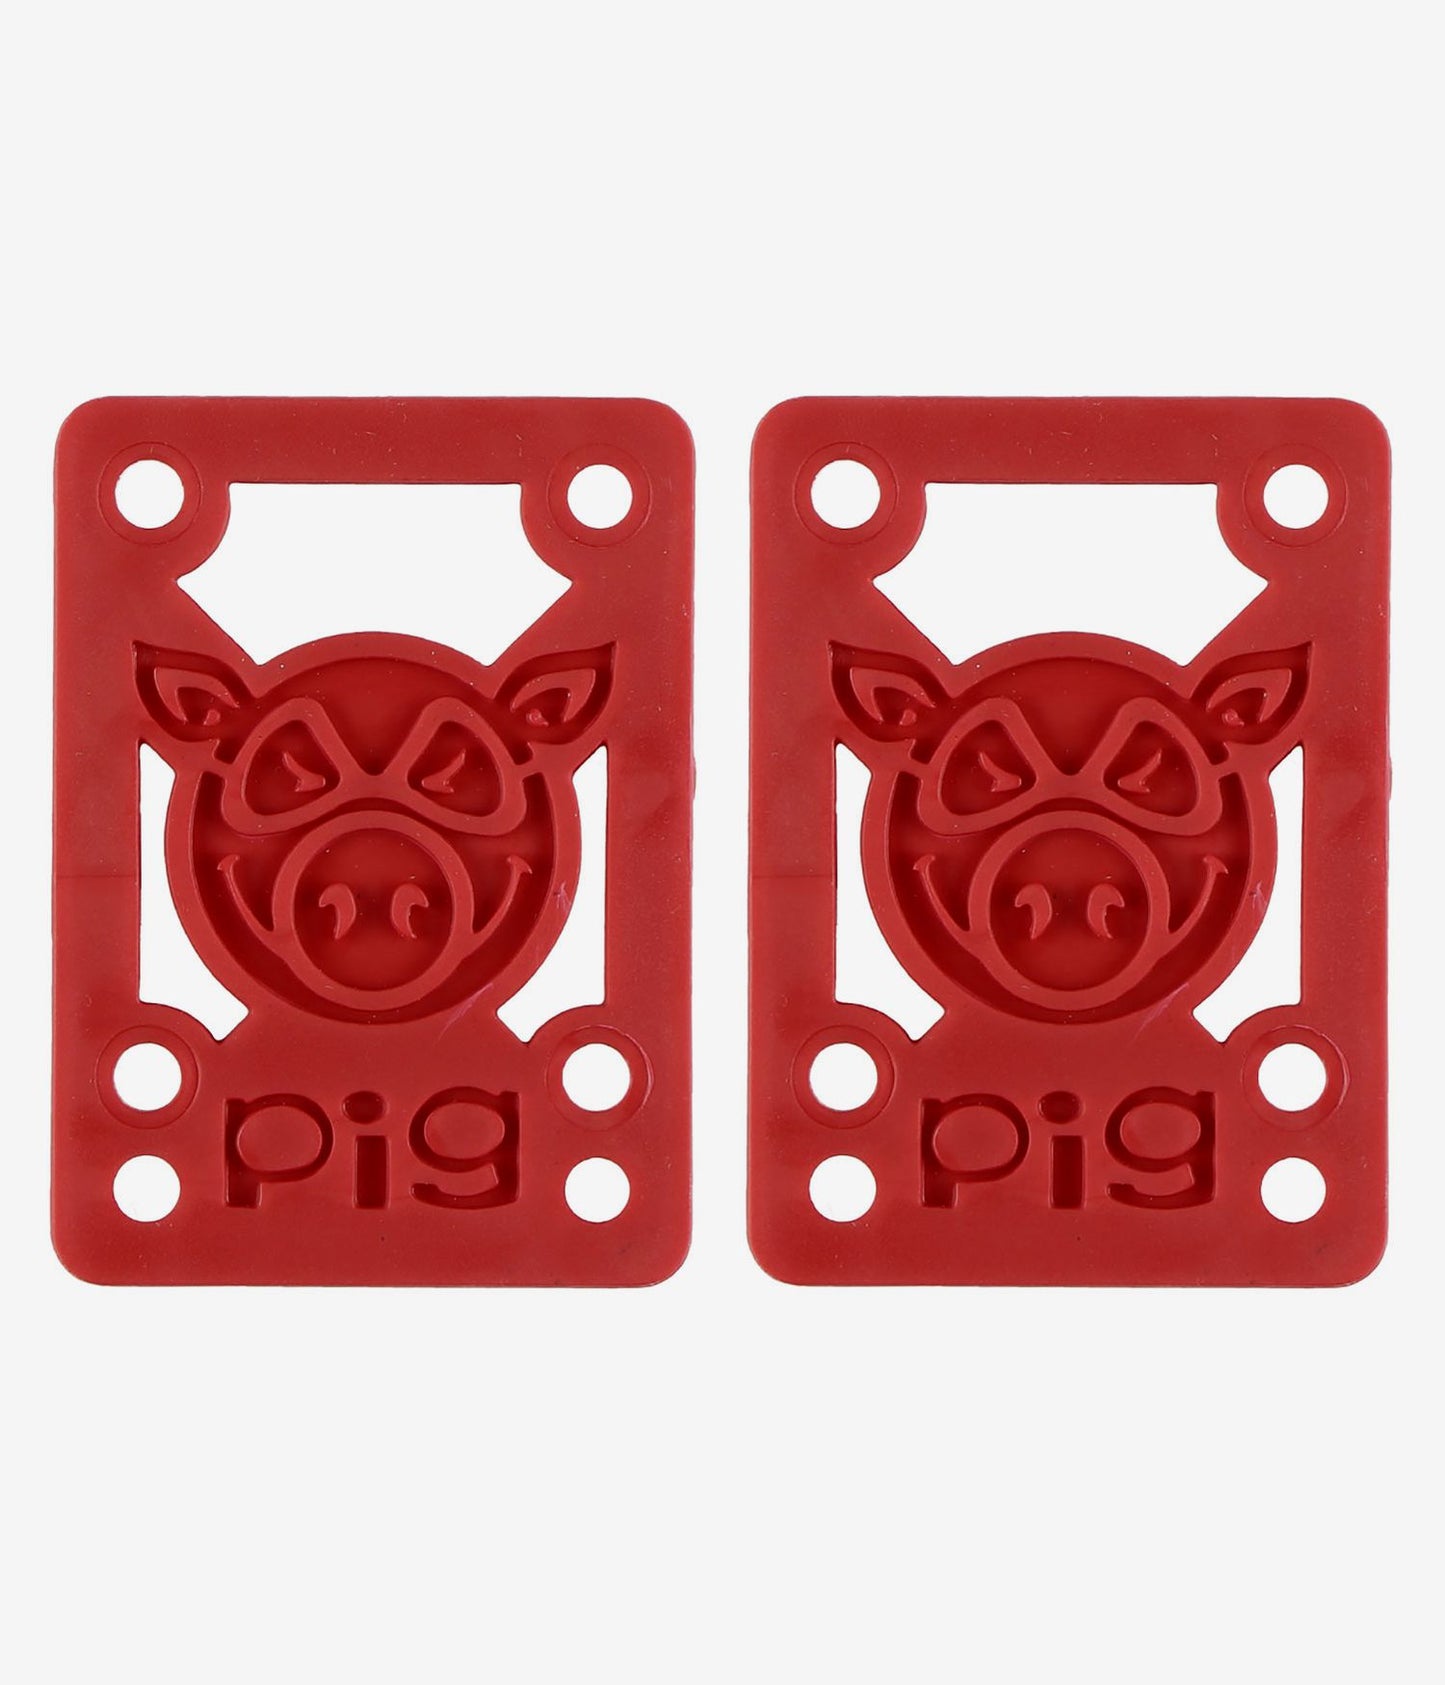 PIG Riser Pads 1/8" - Red